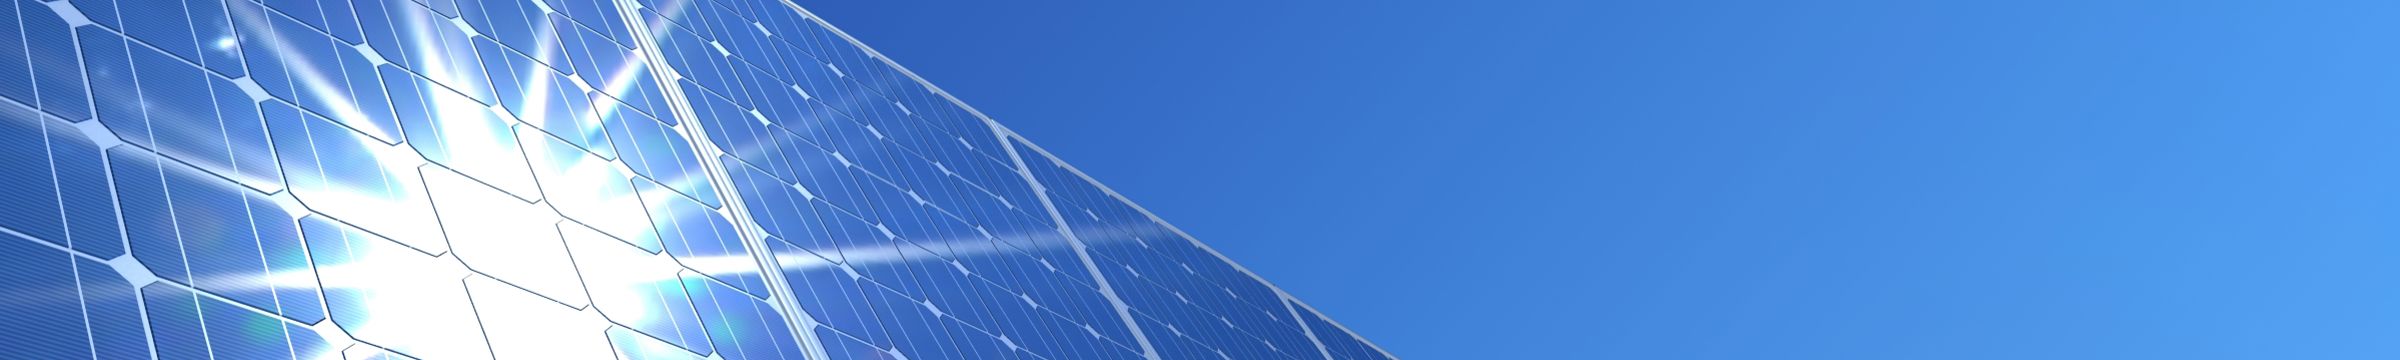 Solar panels reflecting sun